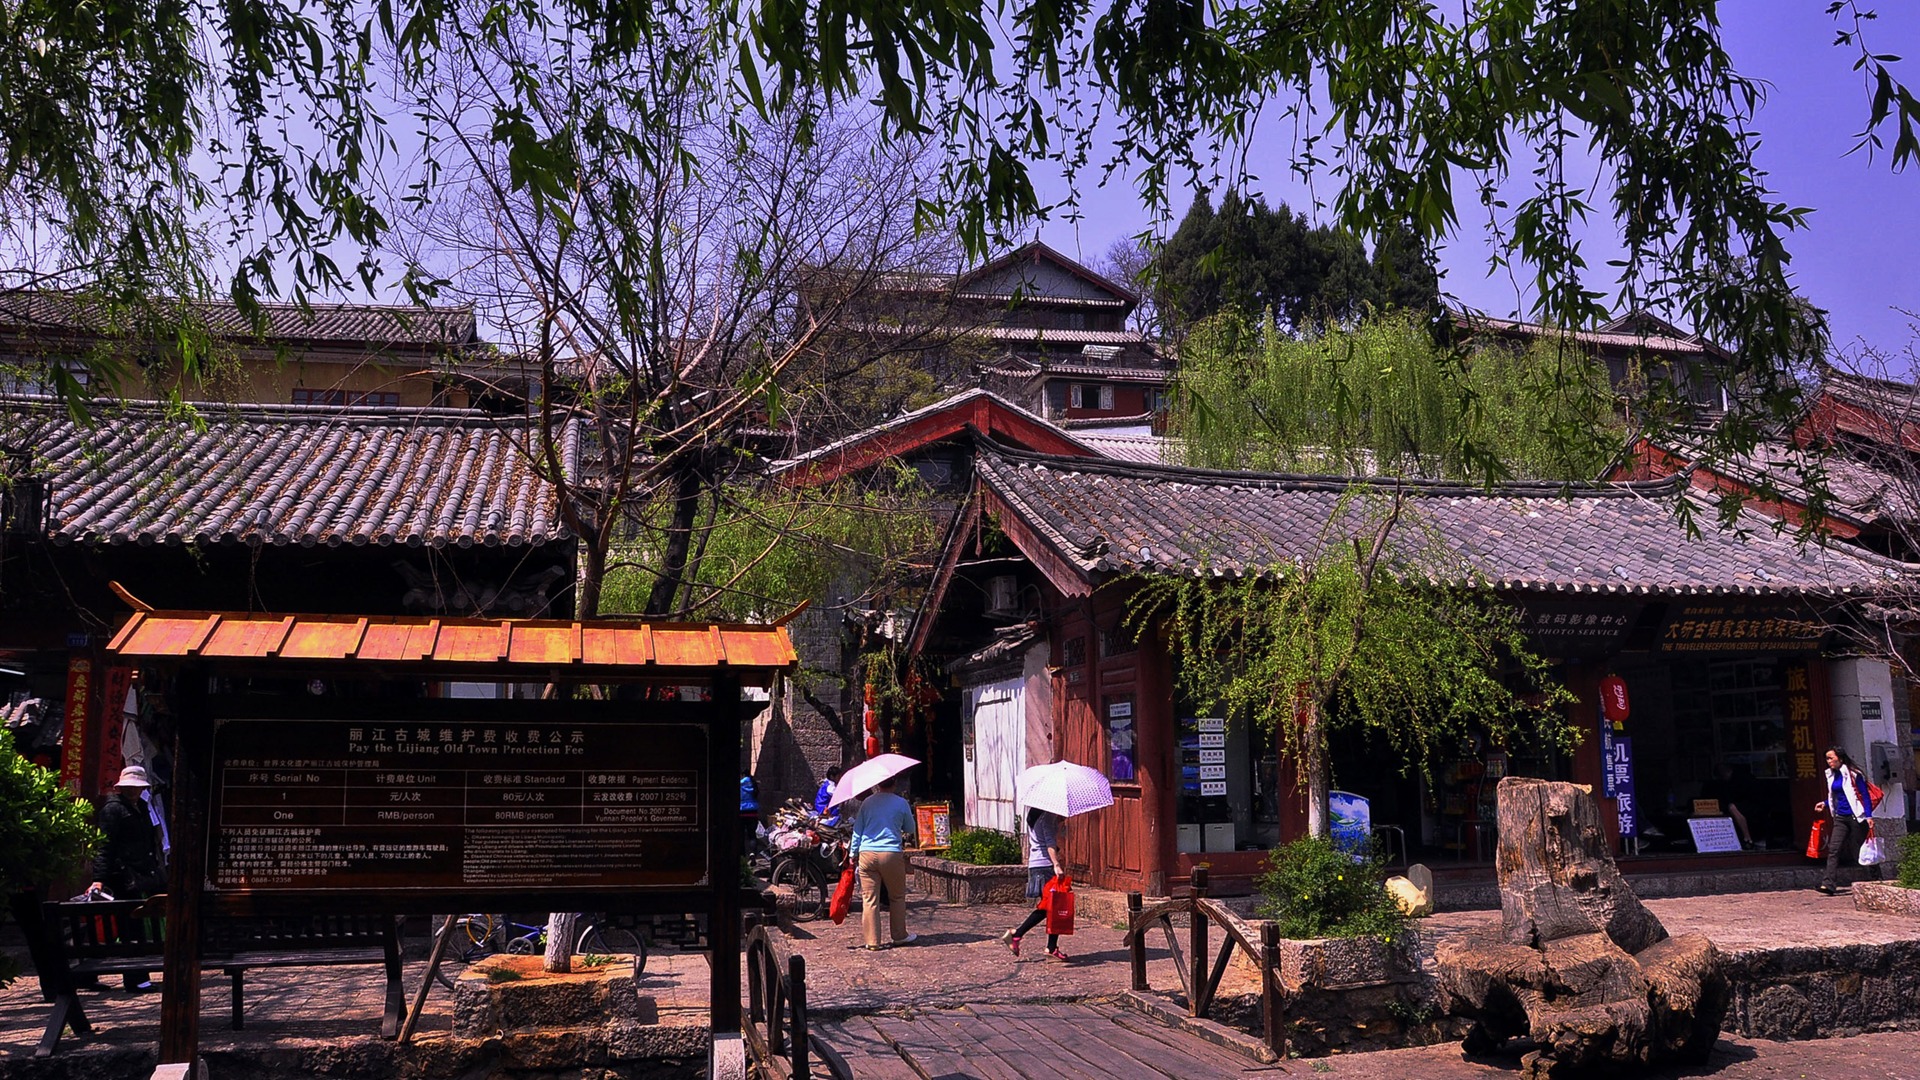 Lijiang ancient town atmosphere (2) (old Hong OK works) #26 - 1920x1080